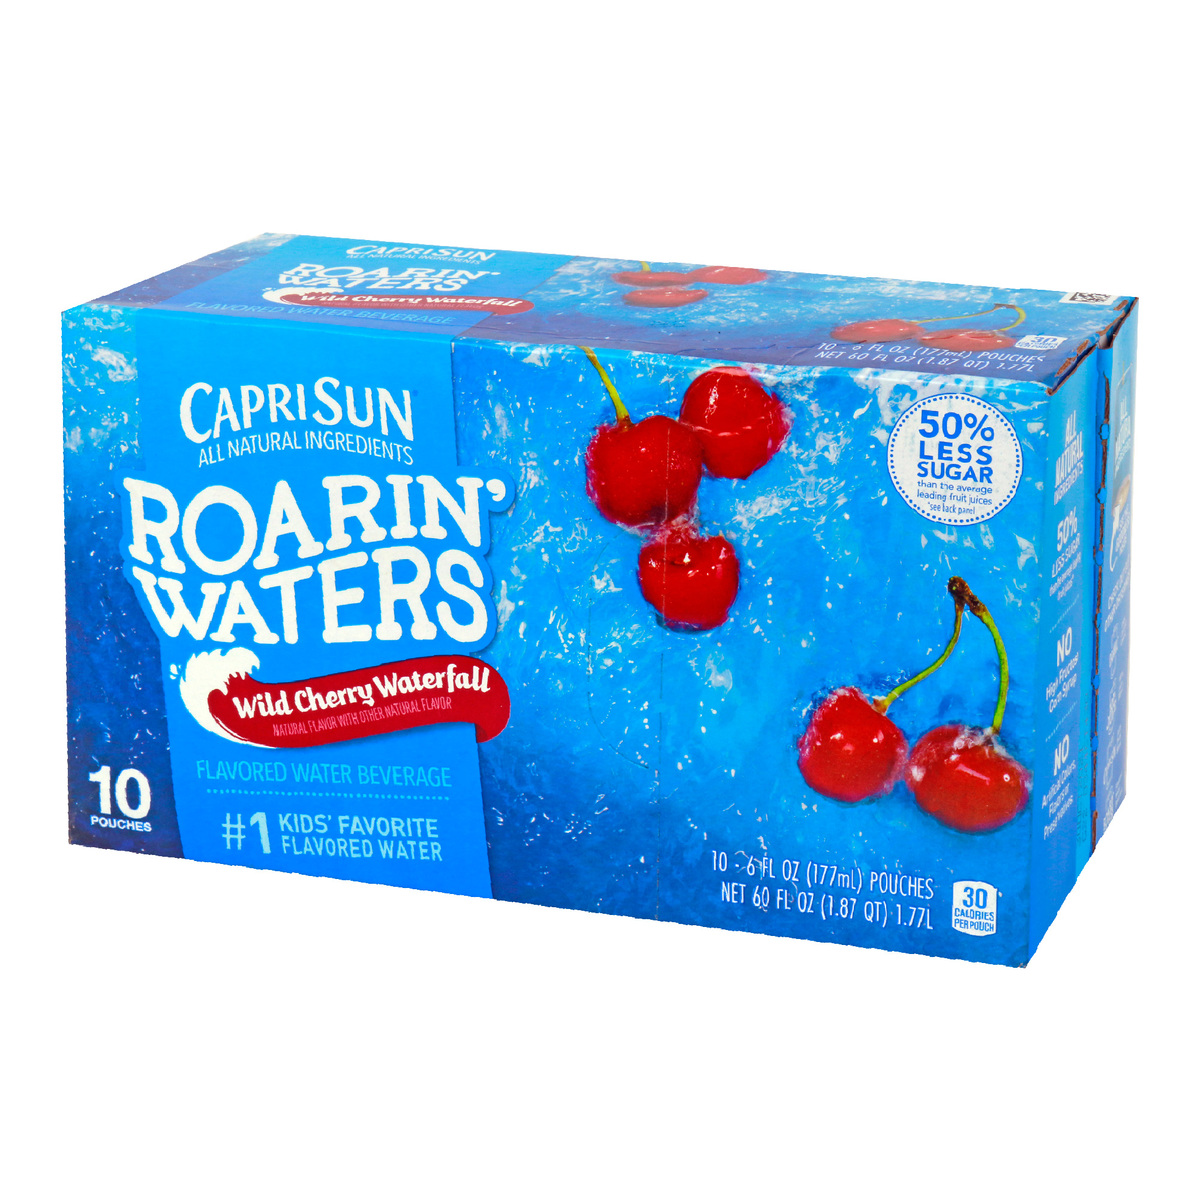 Capri Sun Flavored Water Beverage Roarin' Waters Wild Cherry Waterfall 1.77Litre